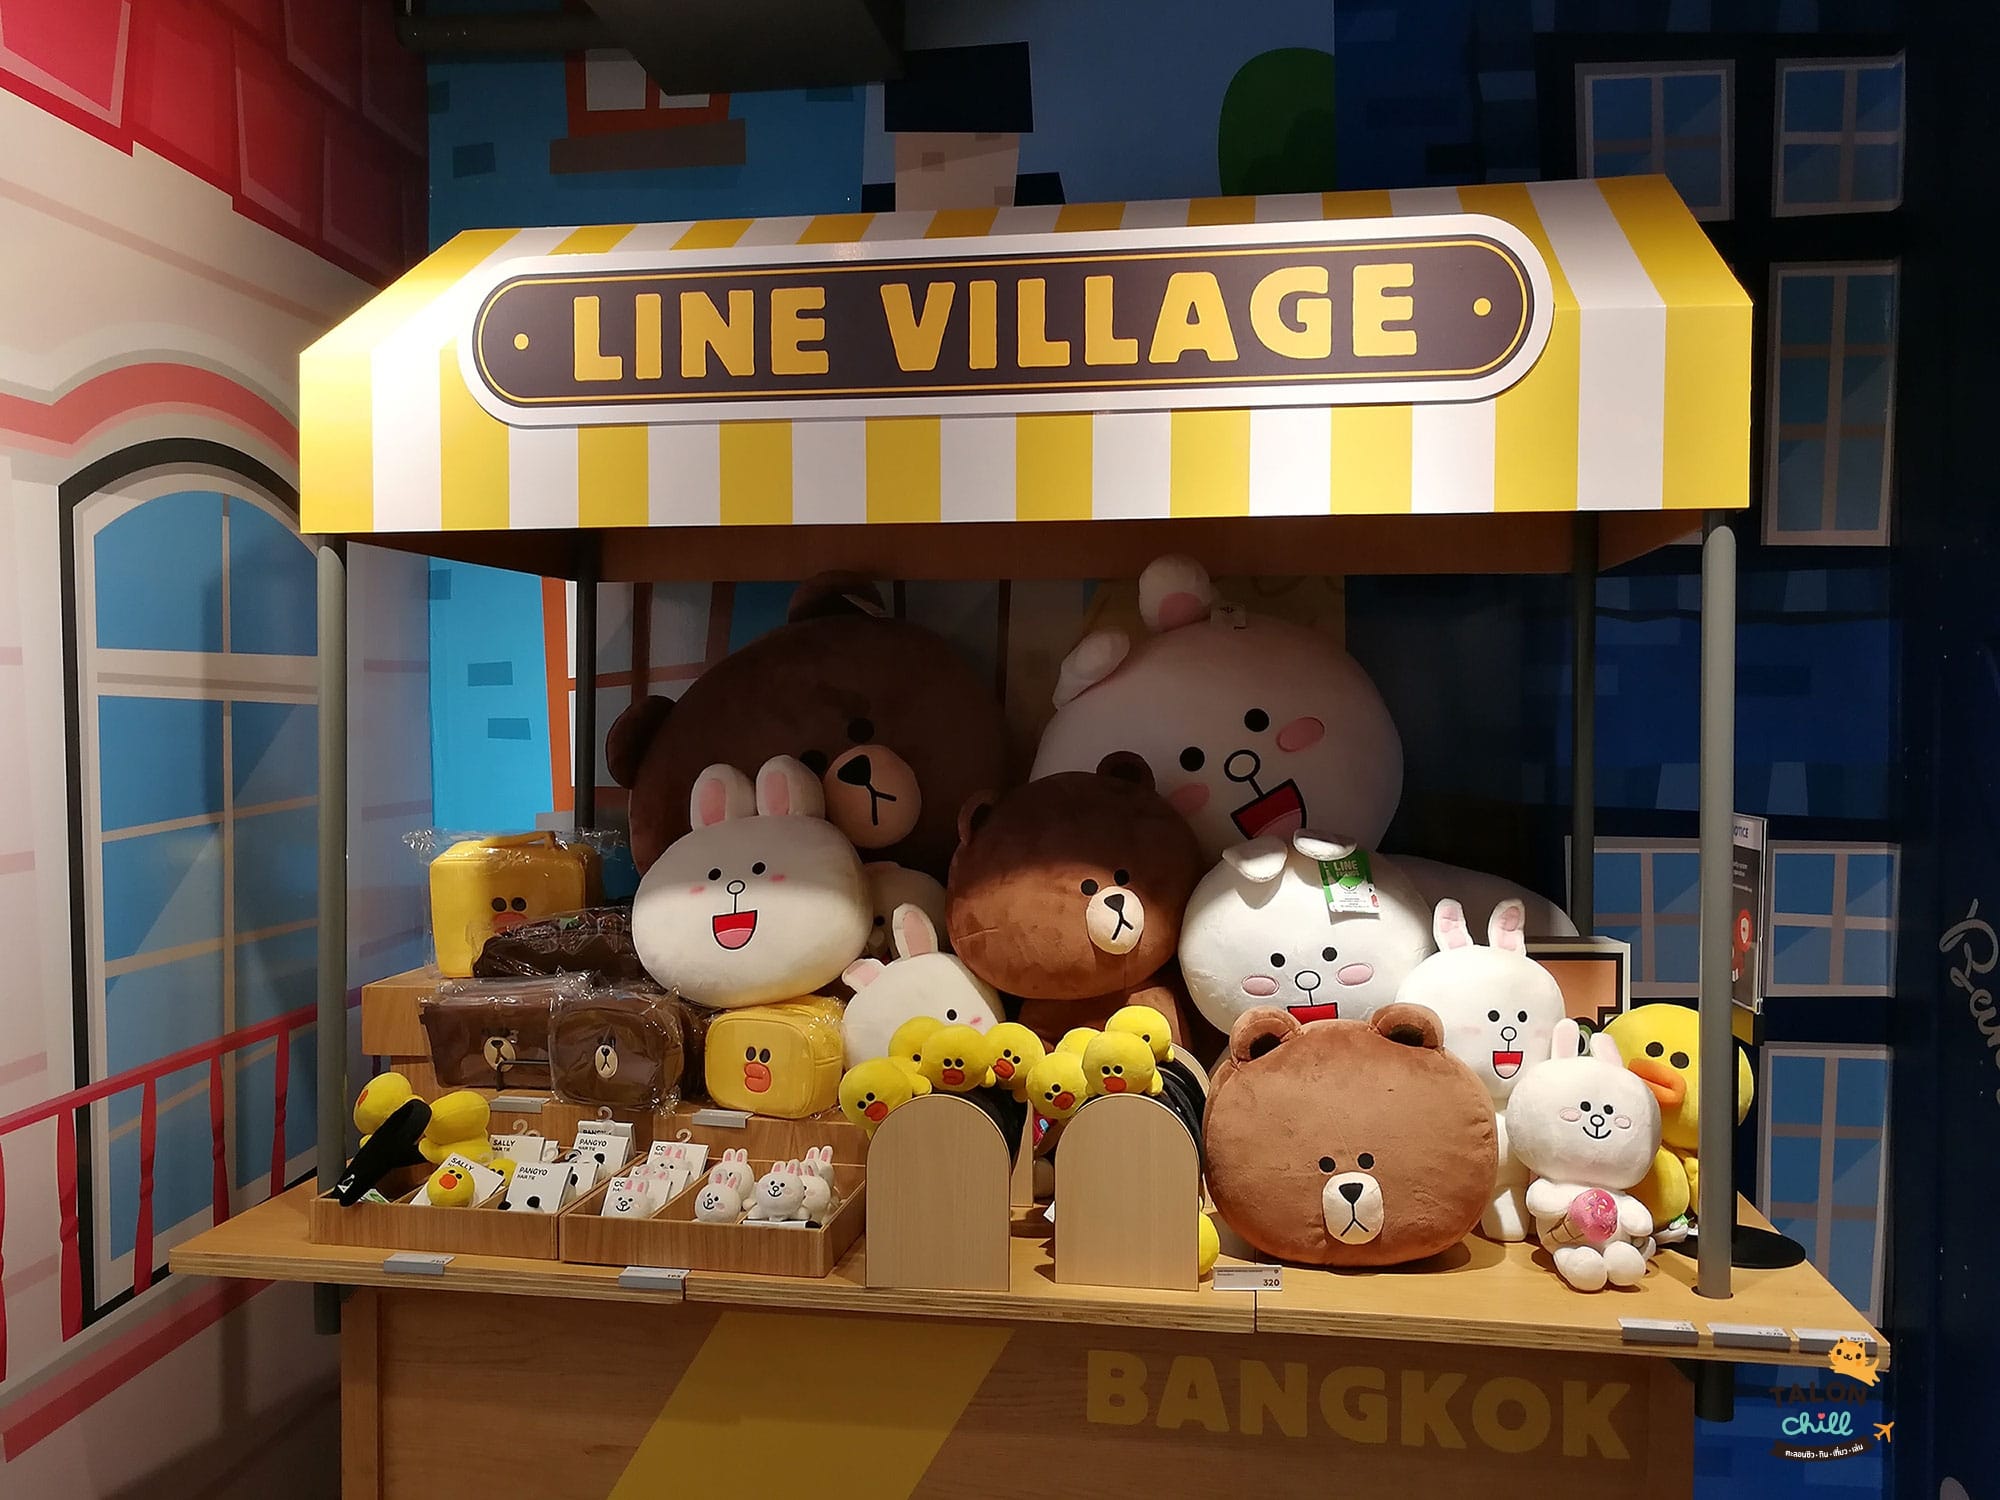 [Review] ร้าน LINE VILLAGE BANGKOK สินค้าลิขสิทธิ์ของ LINE FRIENDS CHARACTER